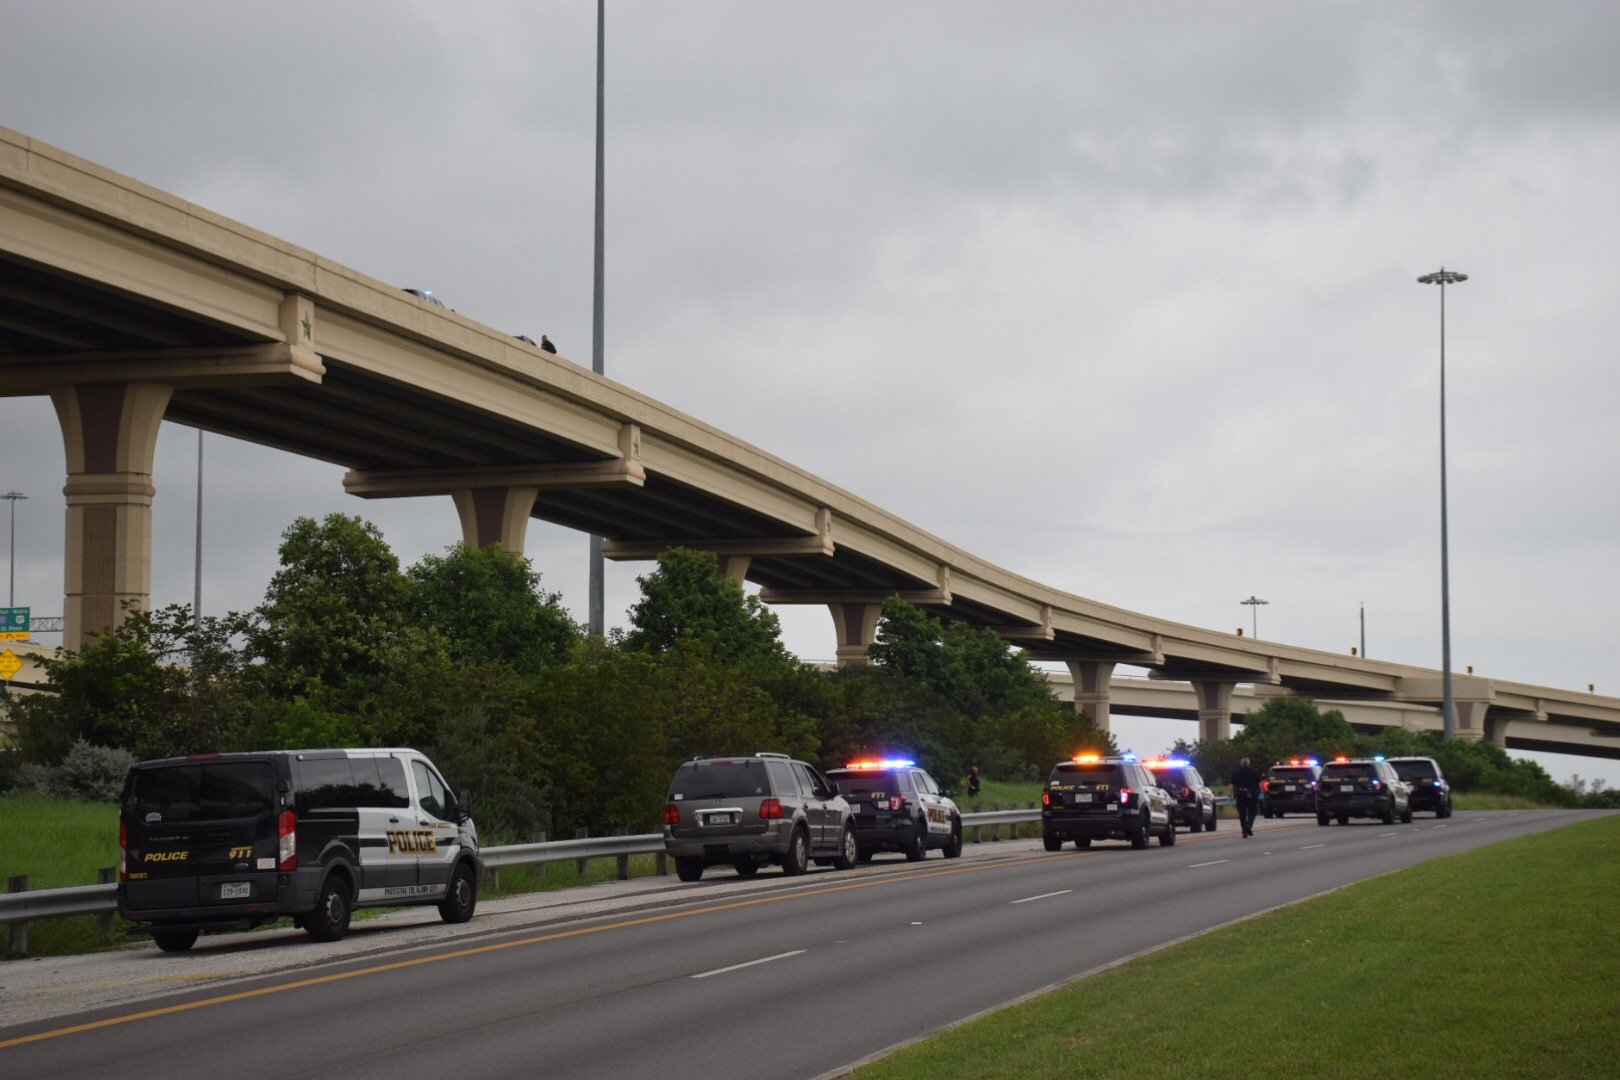 texas freeway express lane shut down